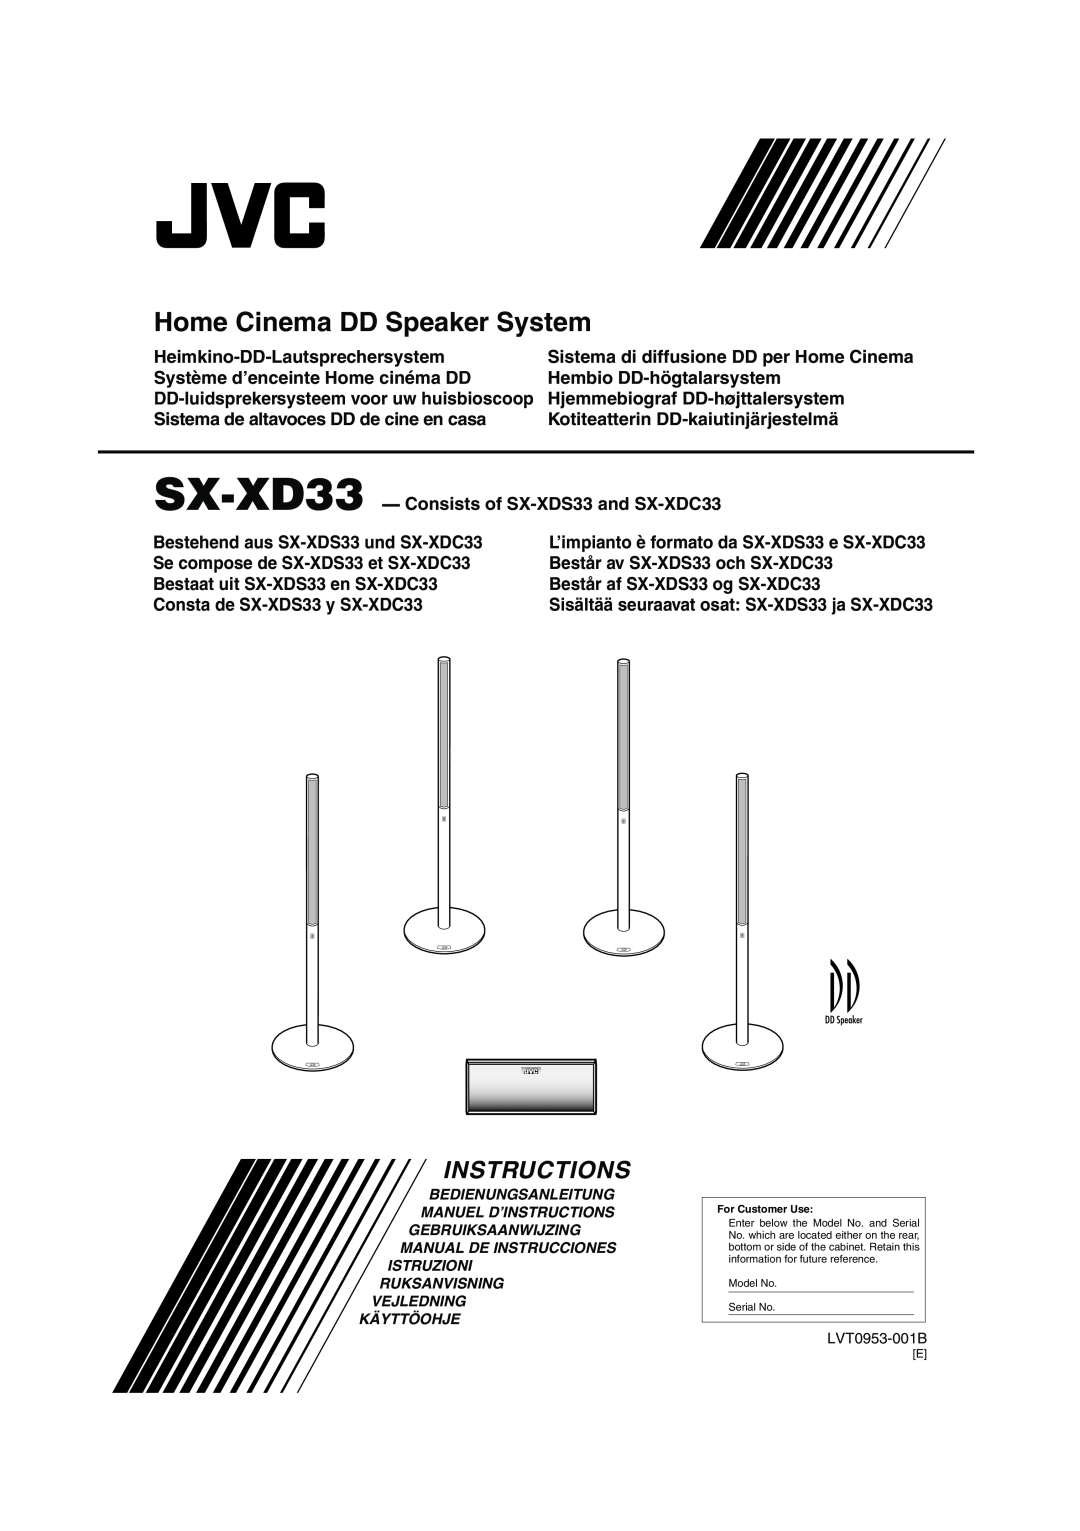 JVC LVT0953-001B manual SX-XD33 - Consists of SX-XDS33and SX-XDC33, Bestehend aus SX-XDS33und SX-XDC33, Instructions 